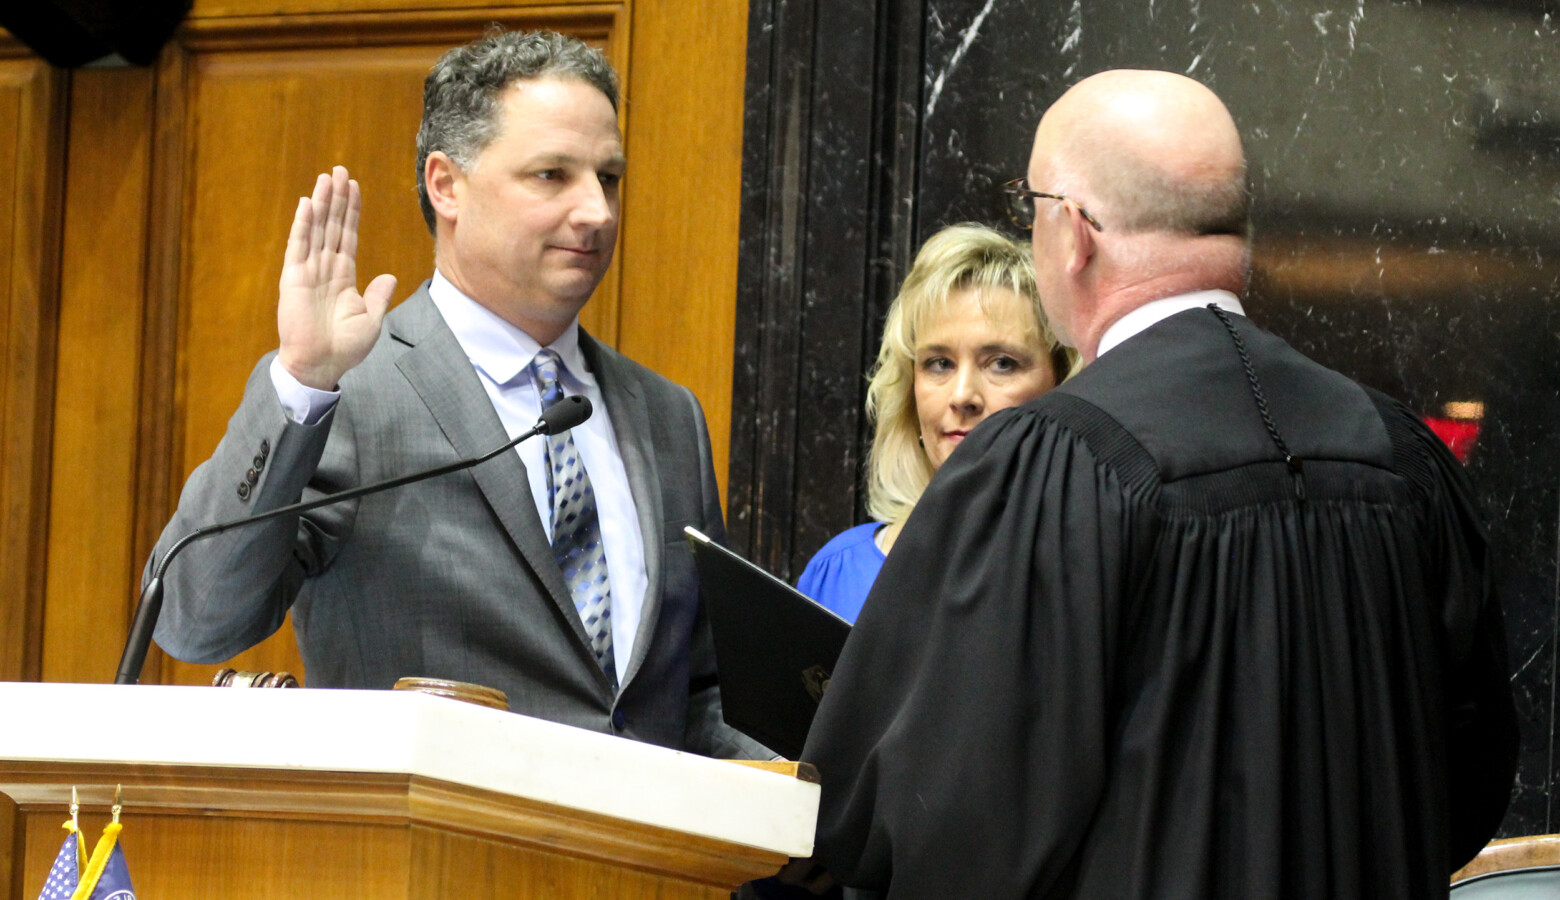 Speaker Todd Huston (R-Fishers) sworn in by Supreme Court Justice Mark Massa. (Lauren Chapman/IPB News)